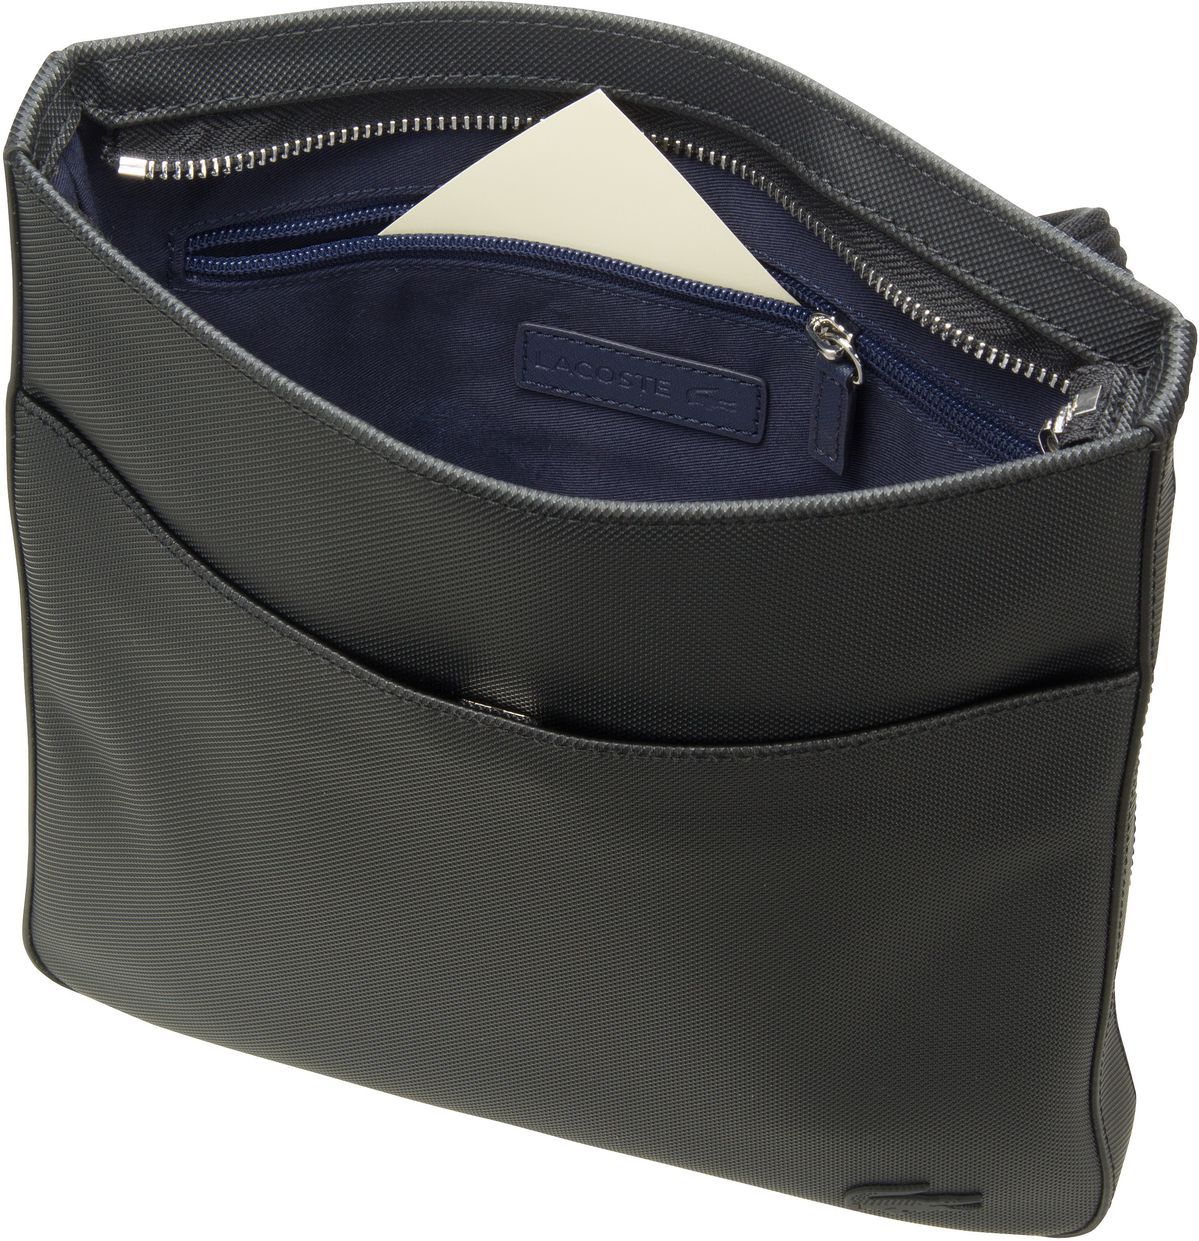 Lacoste Men's Classic Crossover Bag 2850 - Black